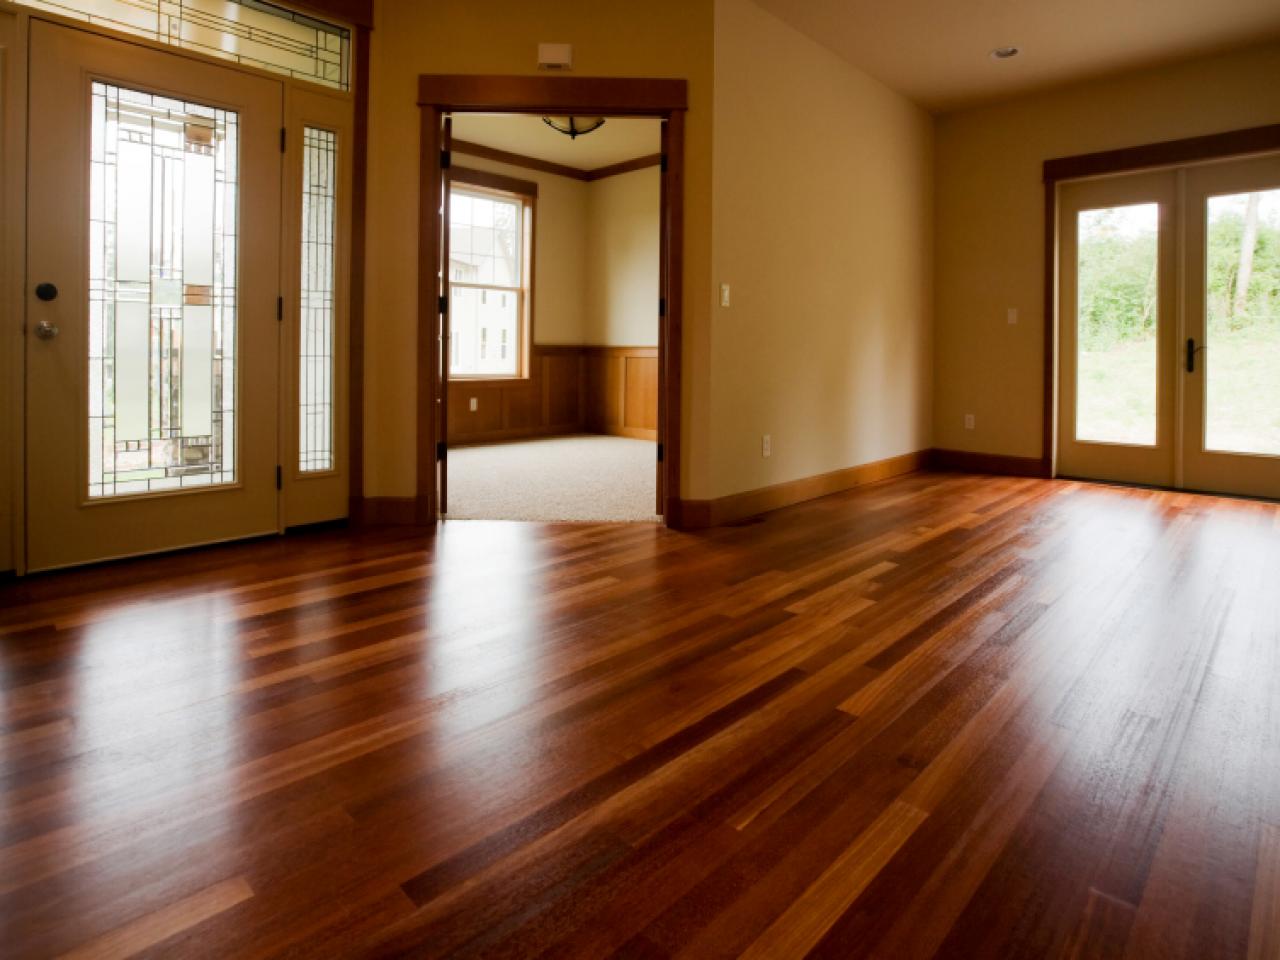 Cleaning Tile Wood And Vinyl Floors, How To Deodorize Hardwood Floors